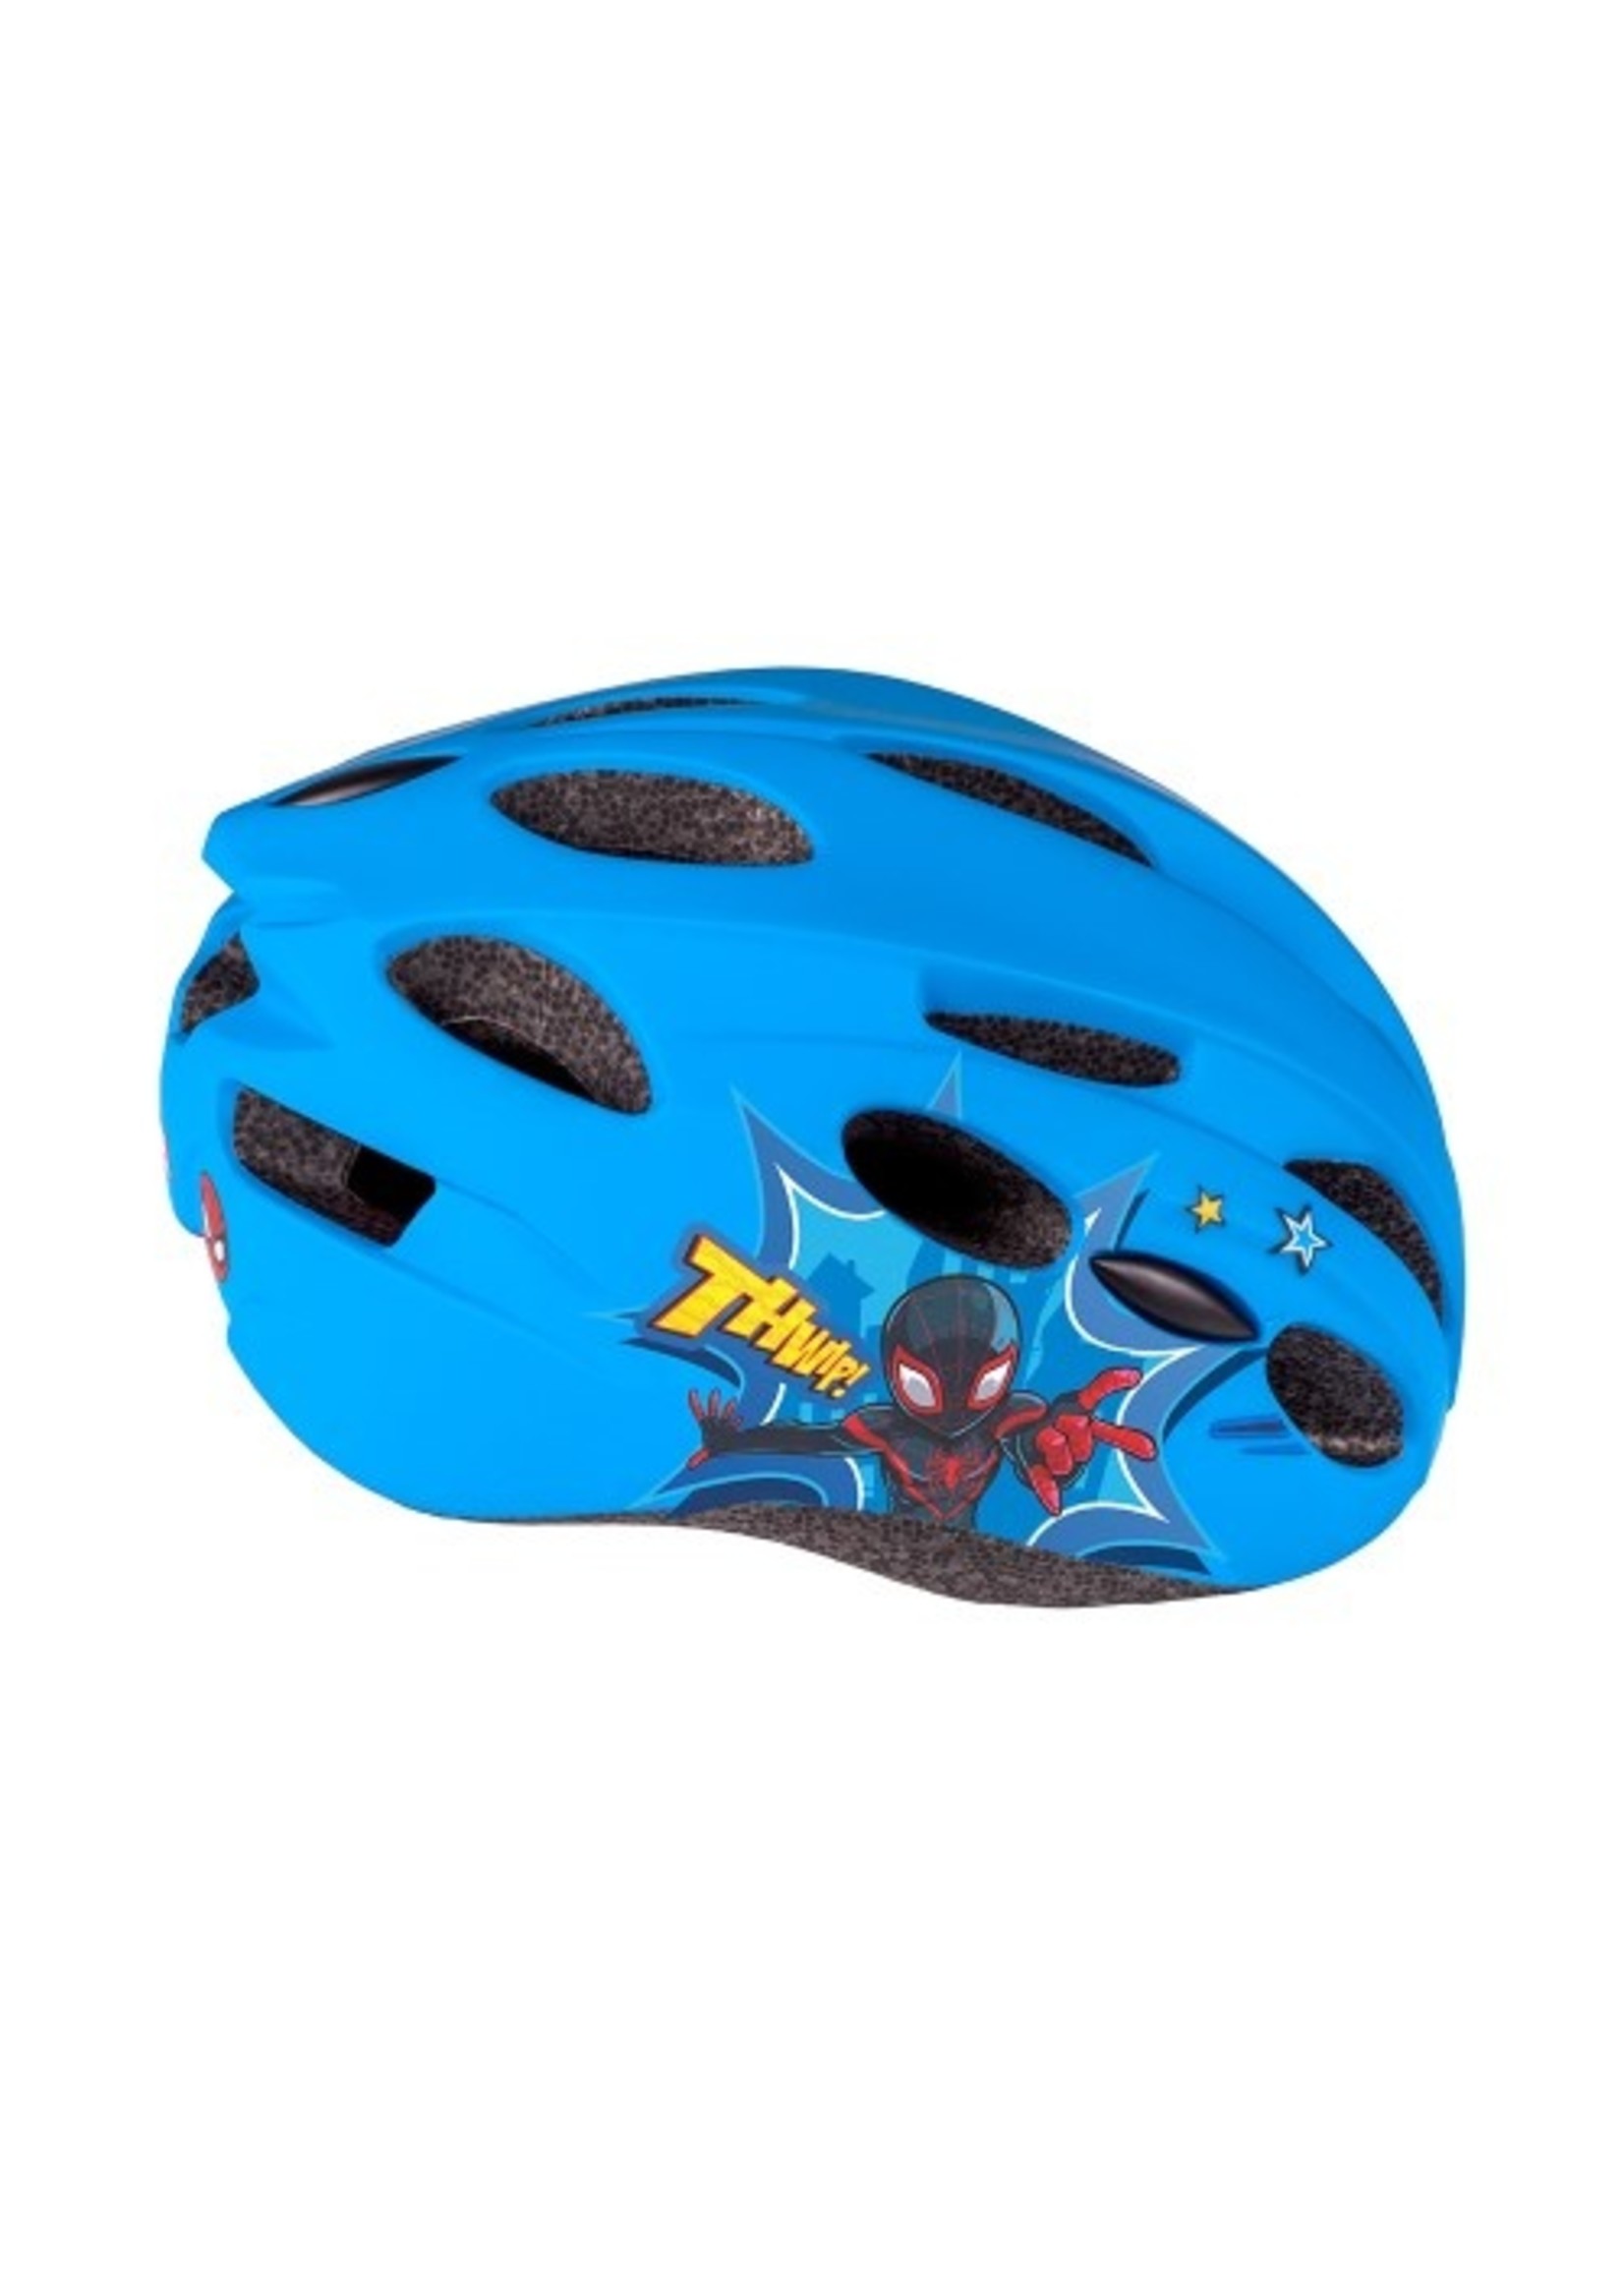 Marvel Spiderman bicycle helmet from Marvel blue